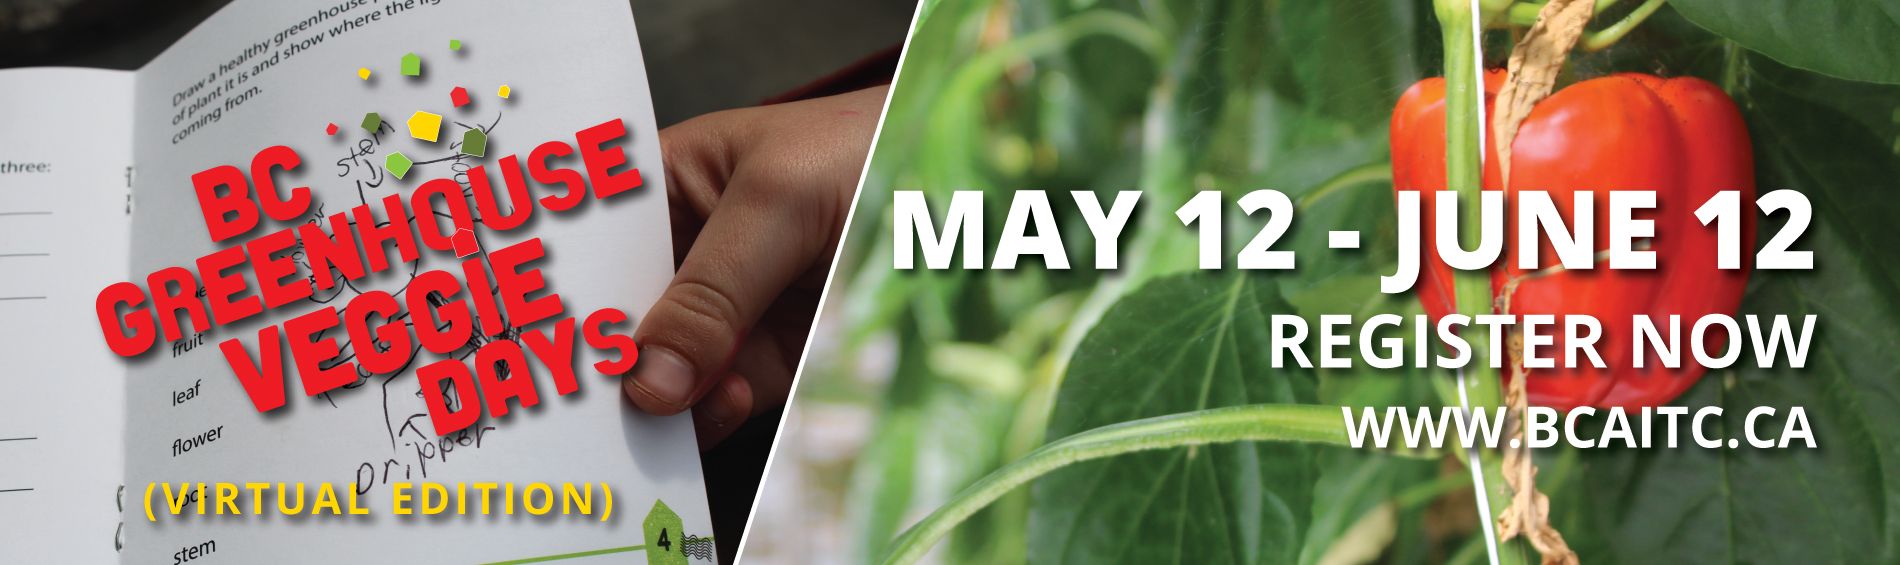 Register Now - BC Greenhouse Veggie Days (Virtual Edition)